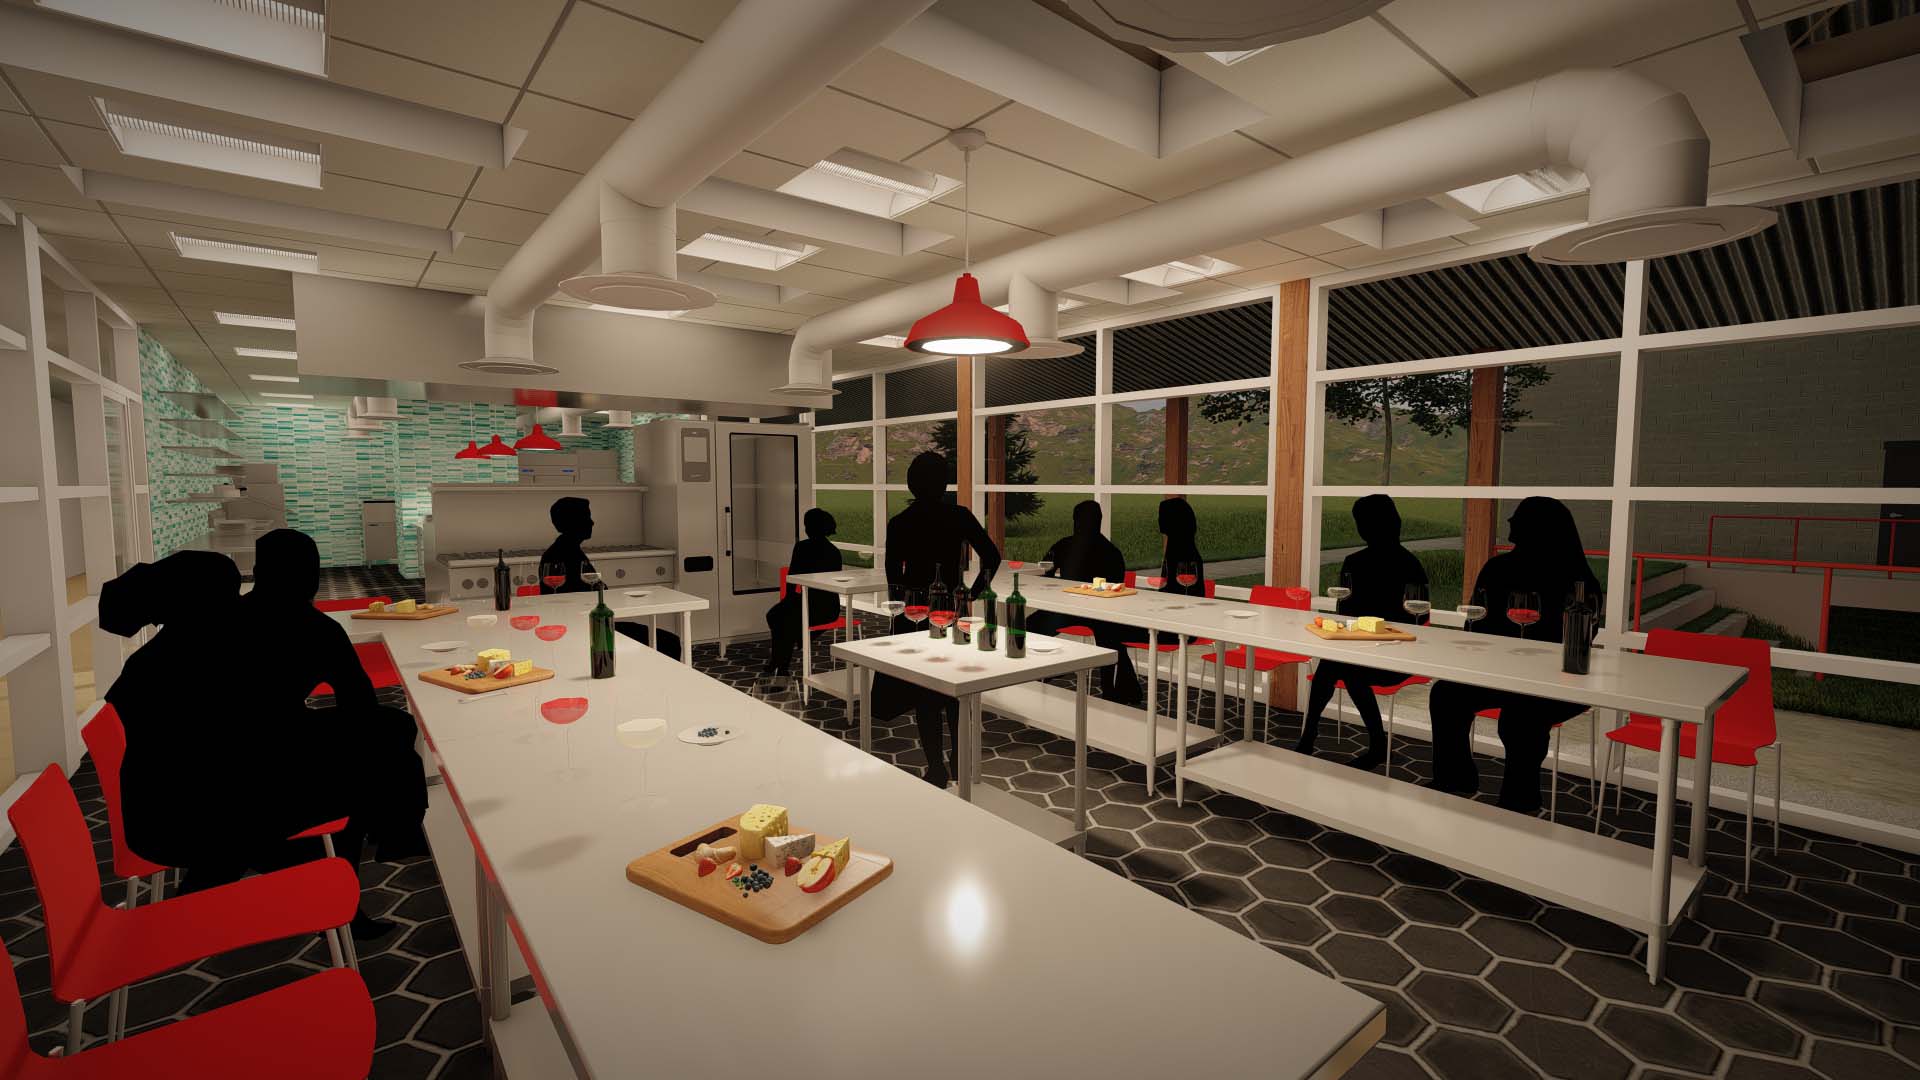 Interior rendering of proposed Aspen campus kitchen